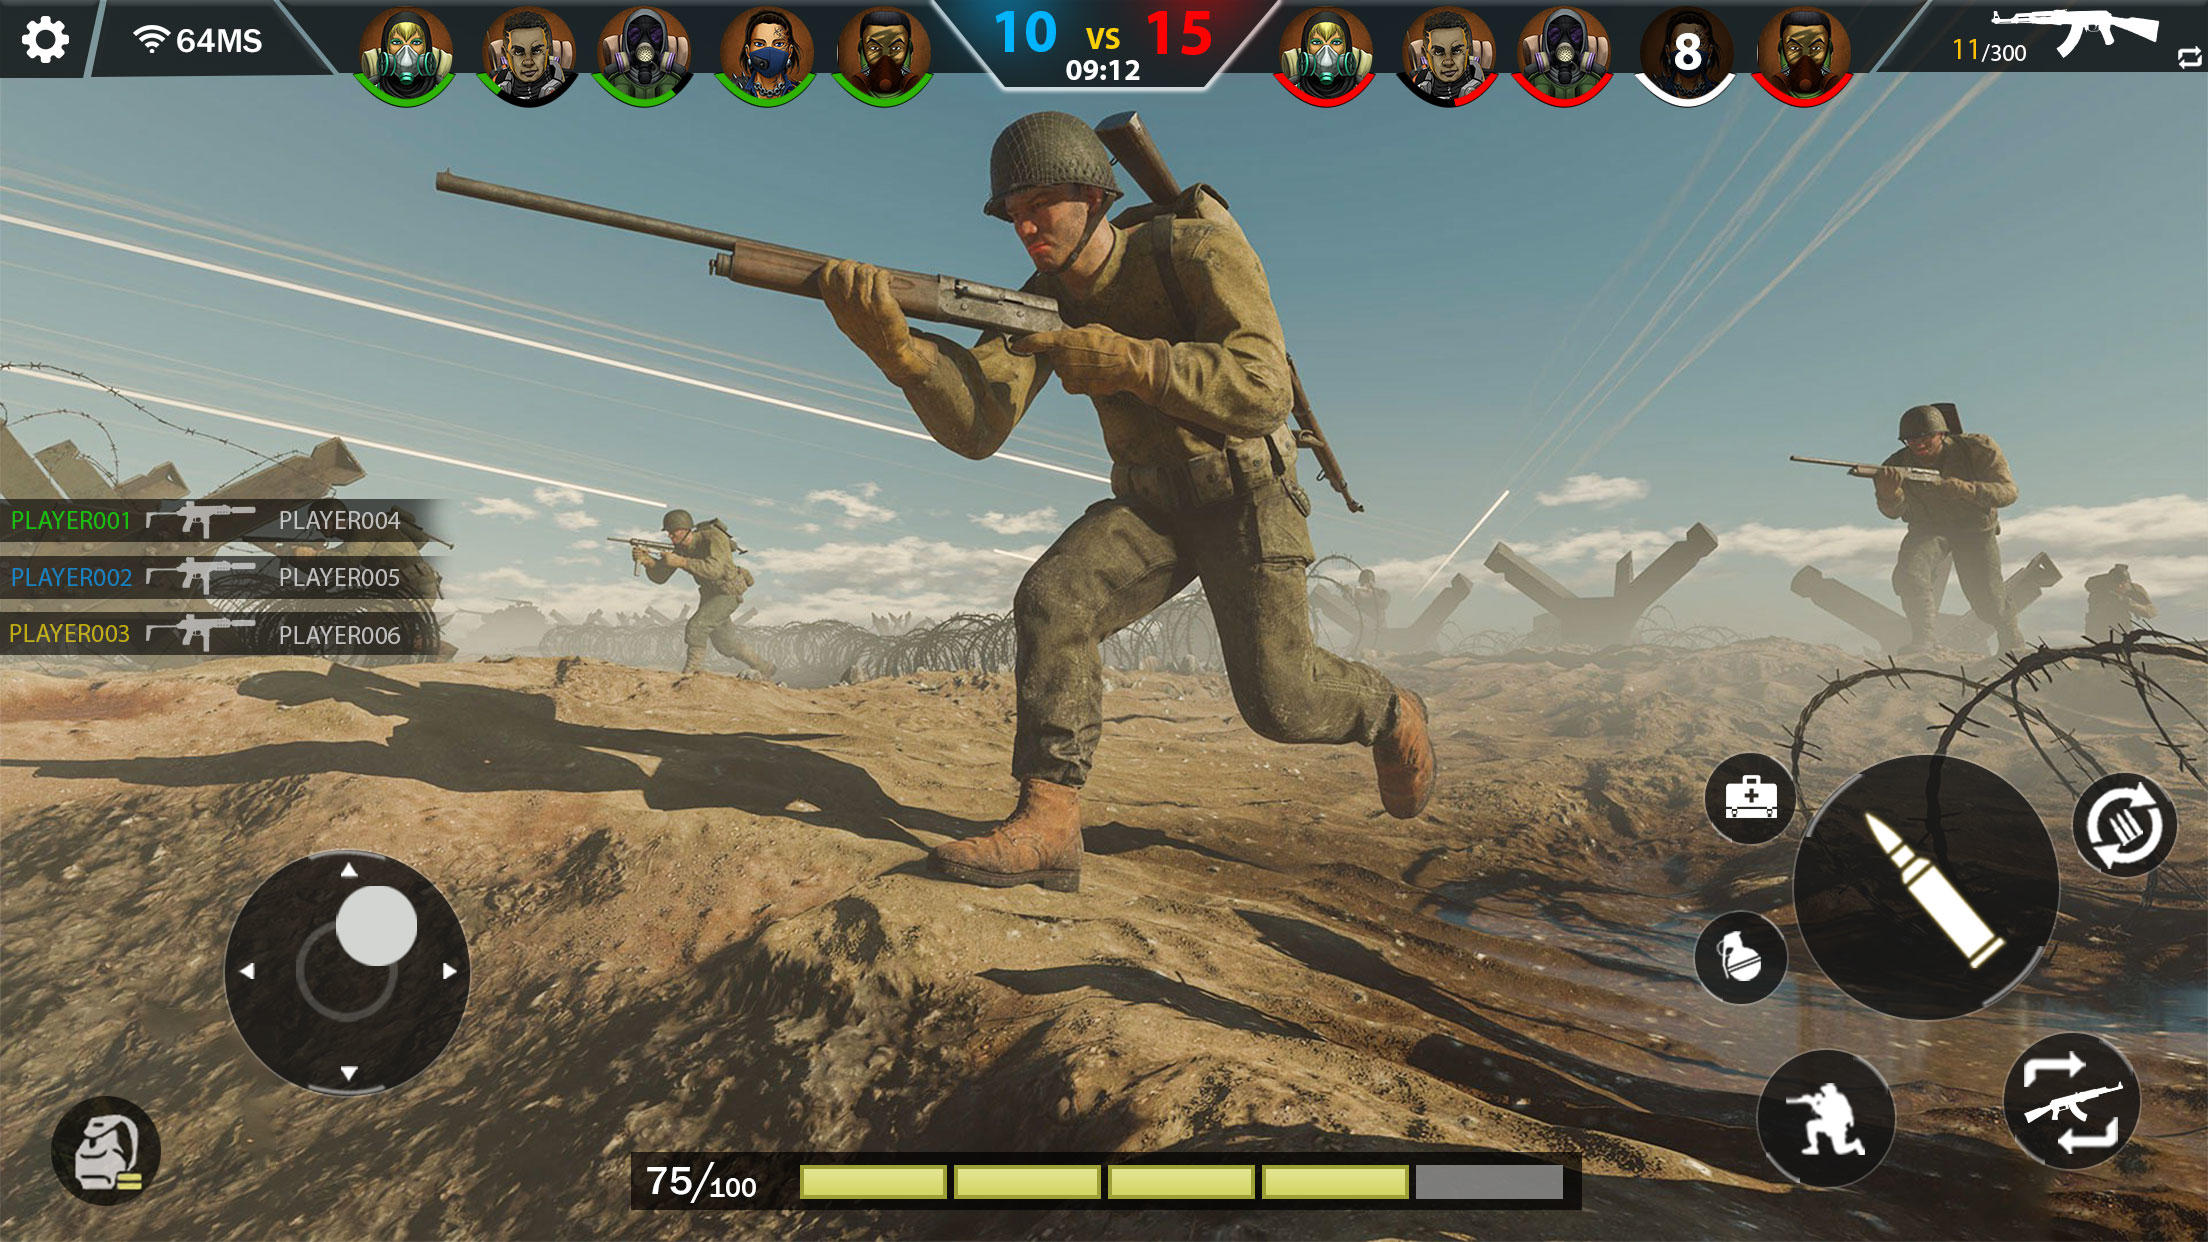 Screenshot 1 of สงครามโลกครั้งที่ 2 เกม: เกมยิง FPS หลายคน 1.3